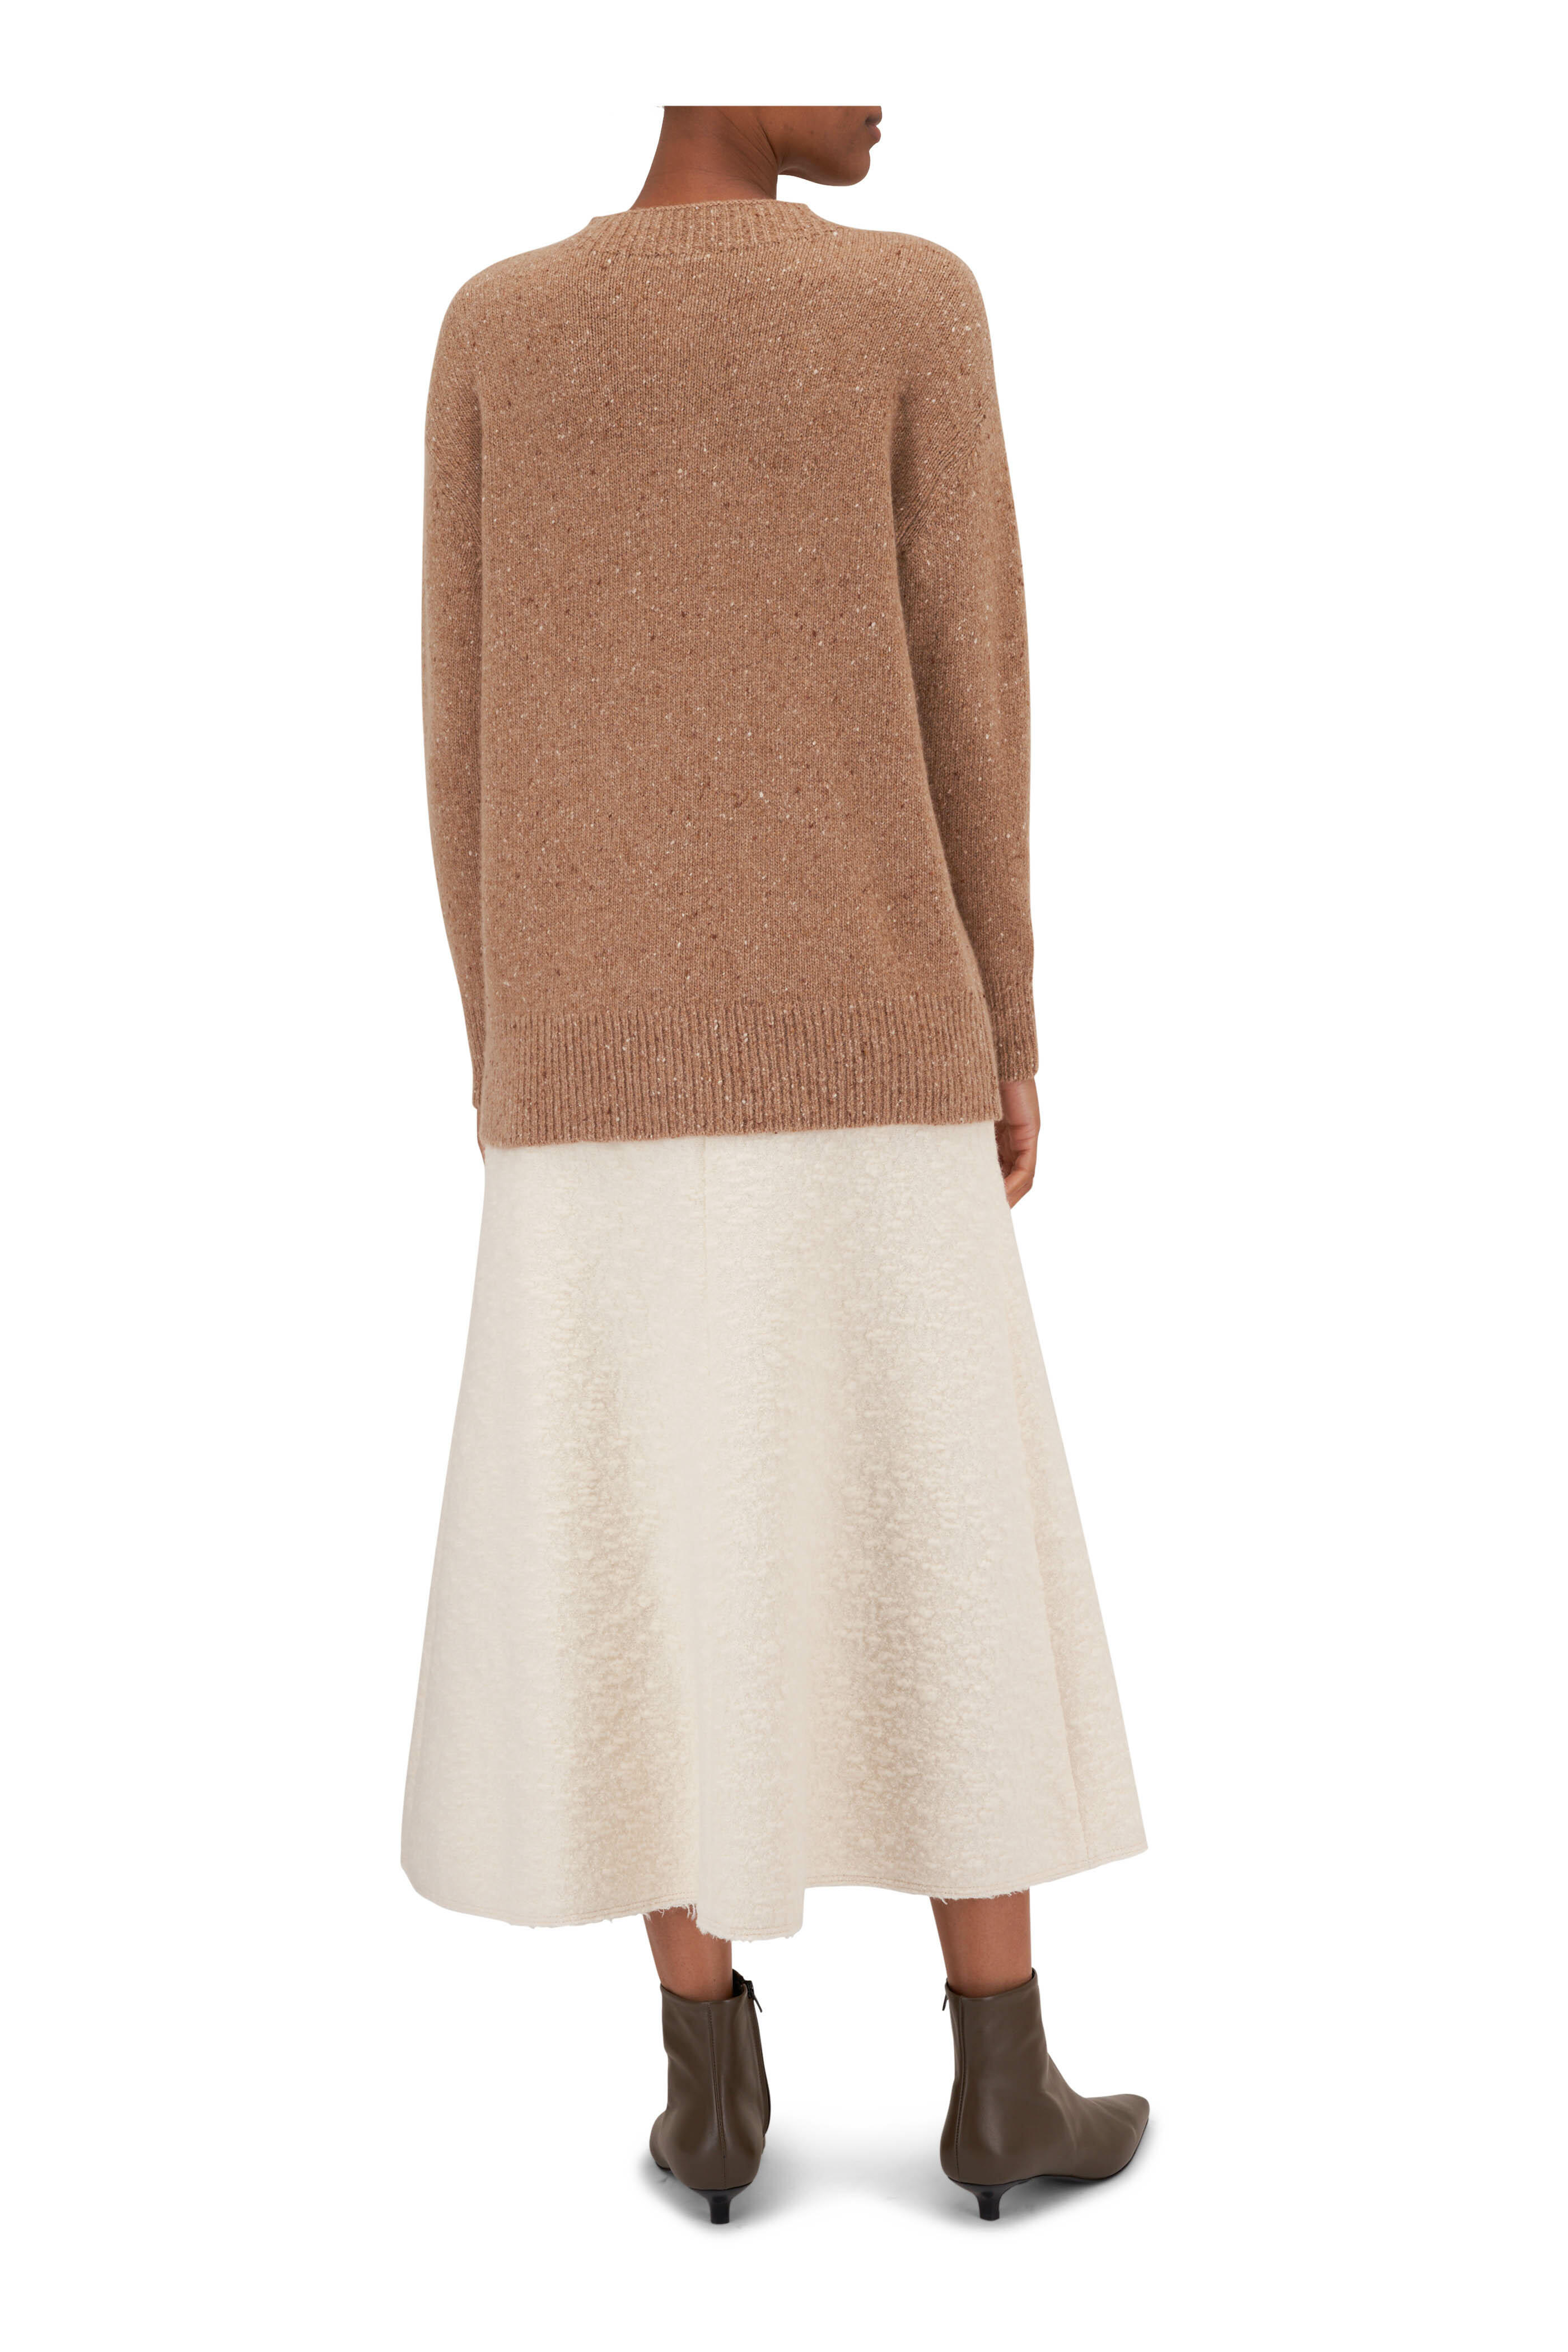 Chloé - Eden White Alpaca & Wool A-Line Midi Skirt